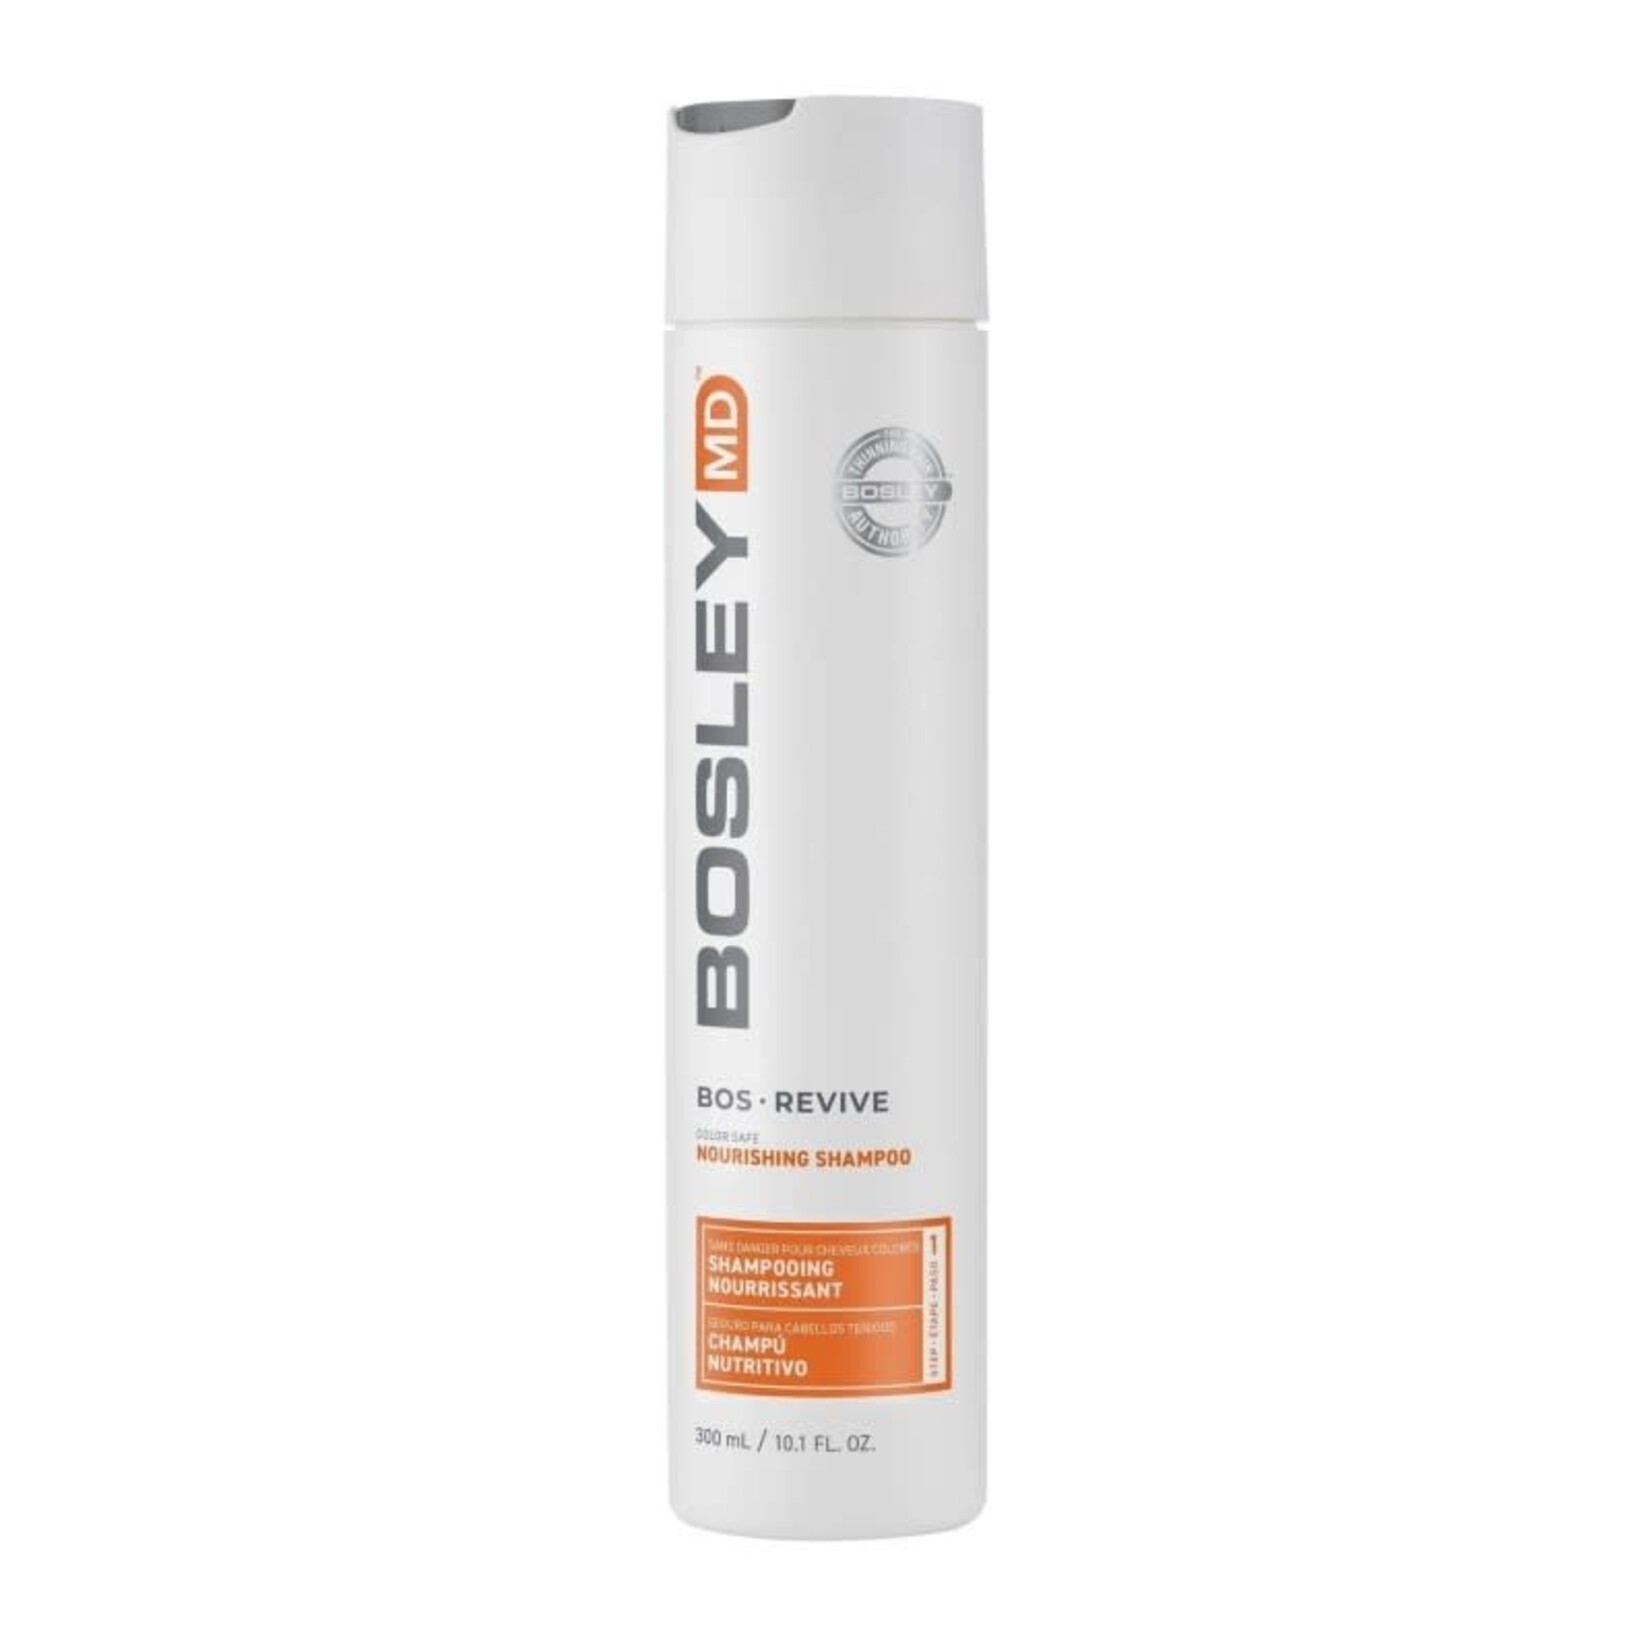 Bosley Bosley MD - Bosrevive - Nourishing Shampoo For Colored Sparse Hair 300ml